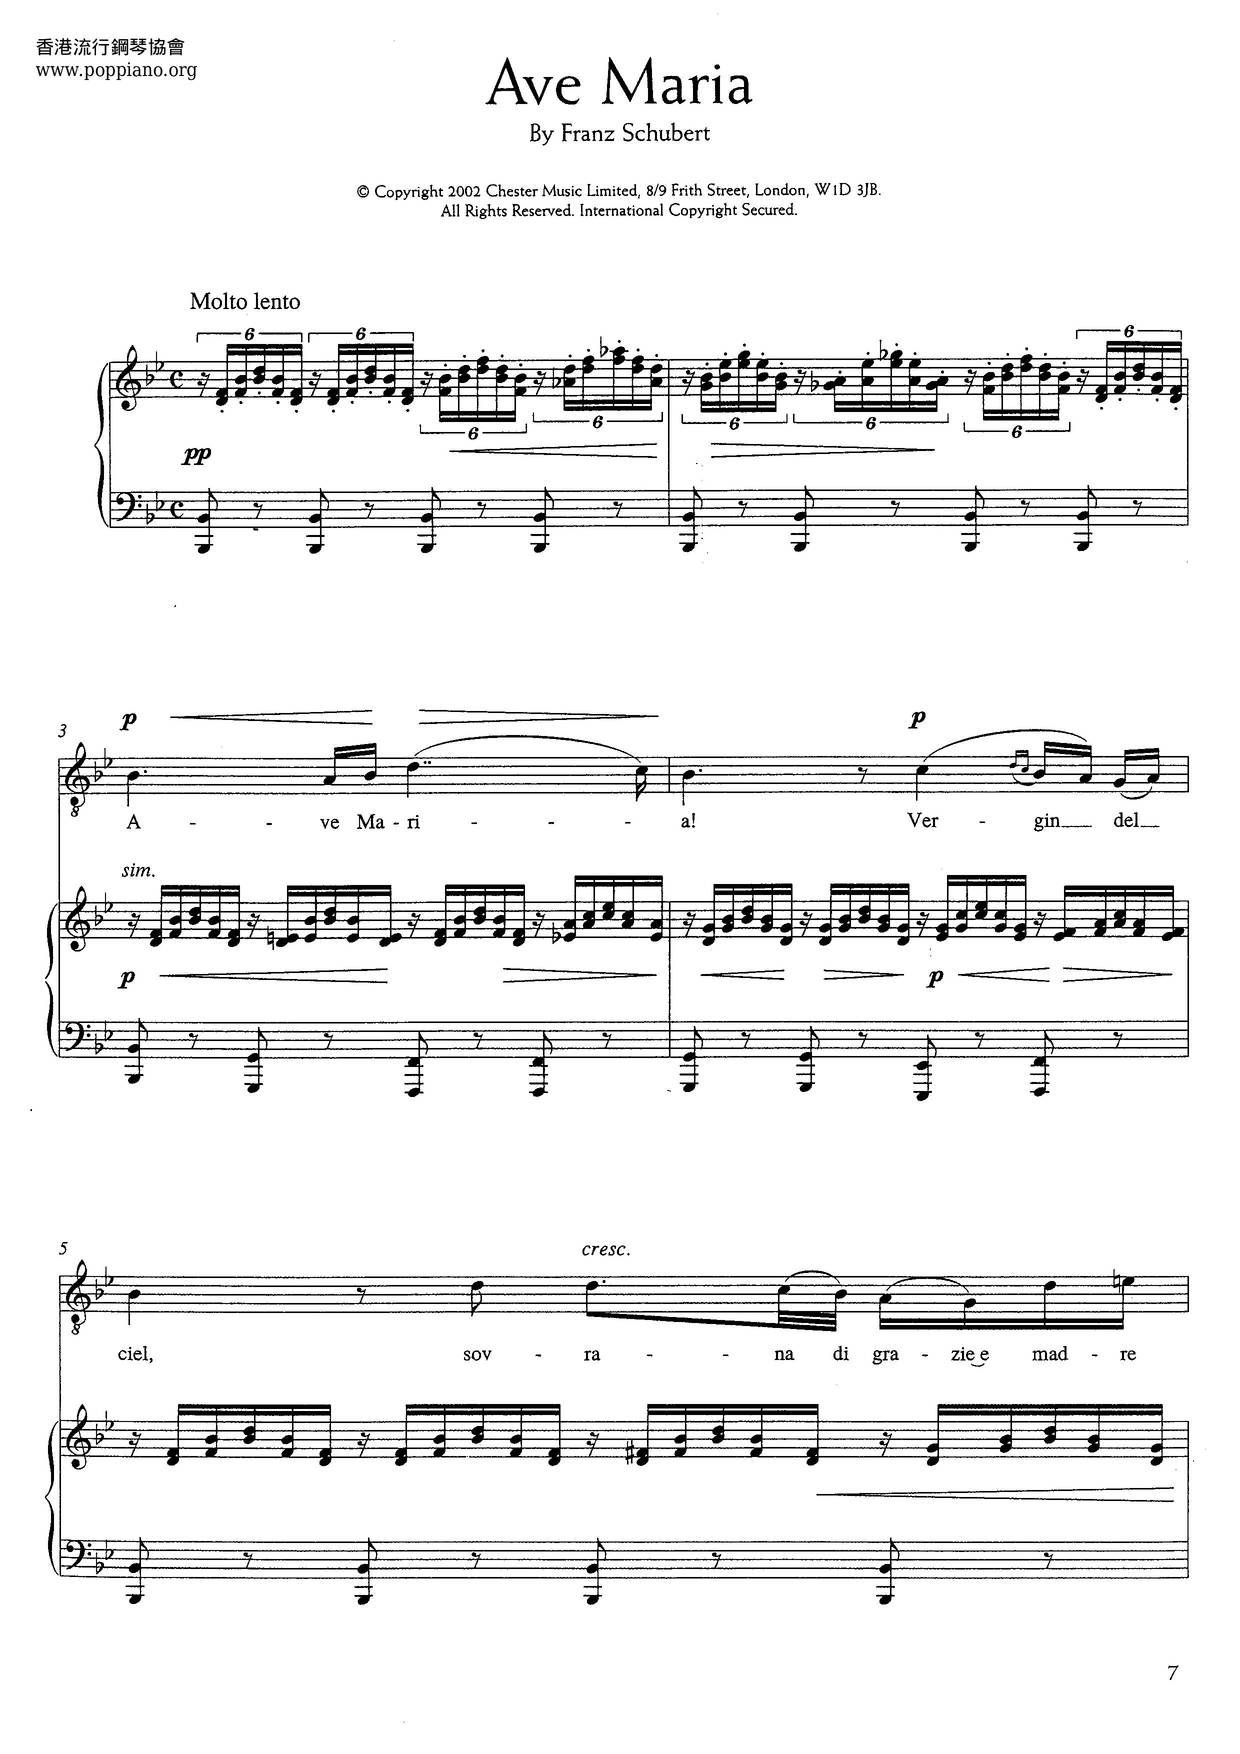 Ave Maria, D.839, Op. 52, No. 6 Score